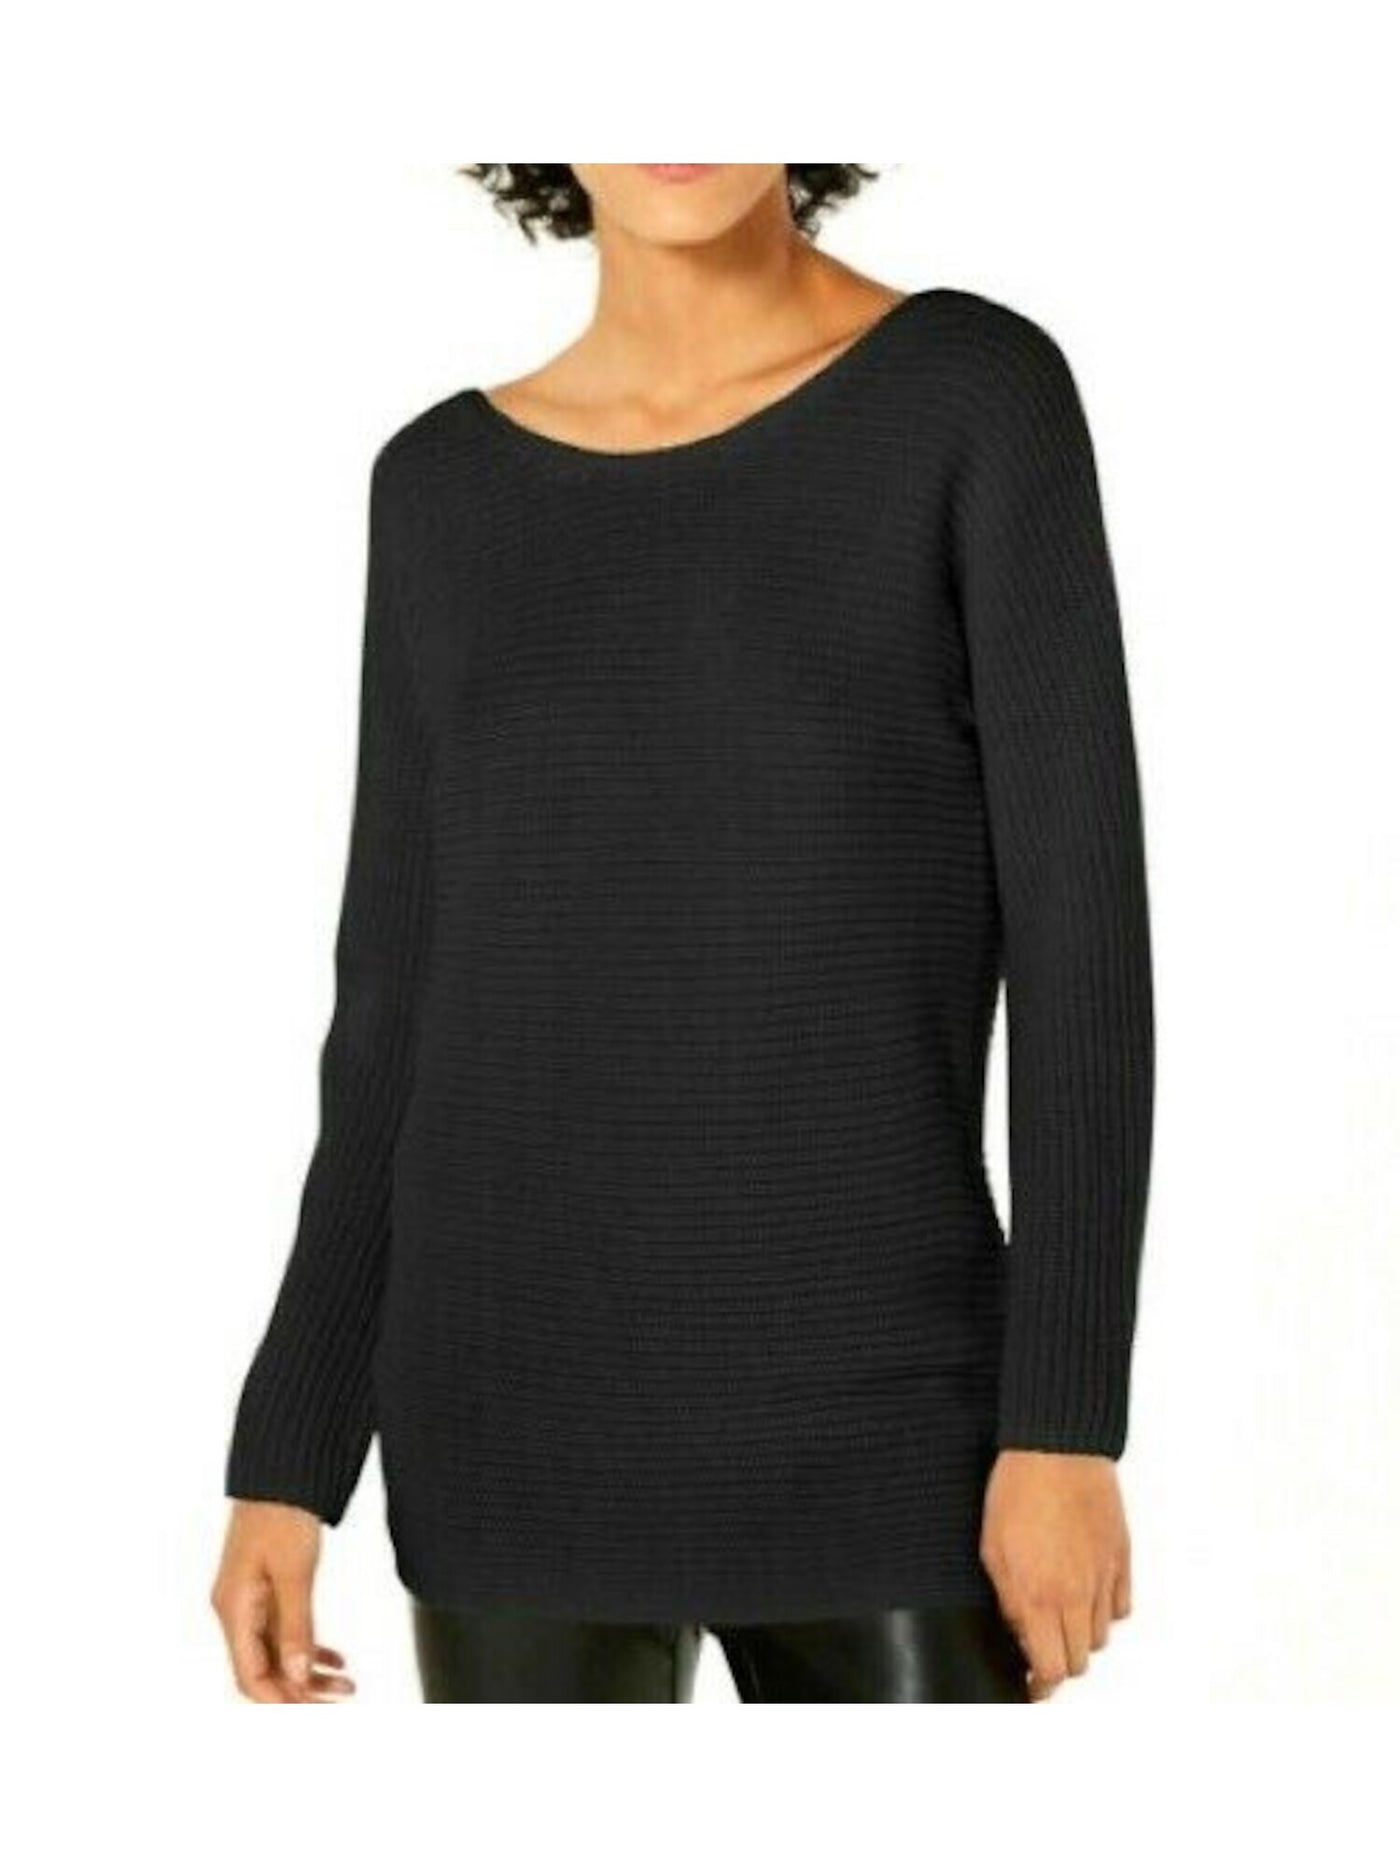 BAR III Womens Black Cut Out Crisscross-back Long Sleeve Scoop Neck Tunic Sweater XS